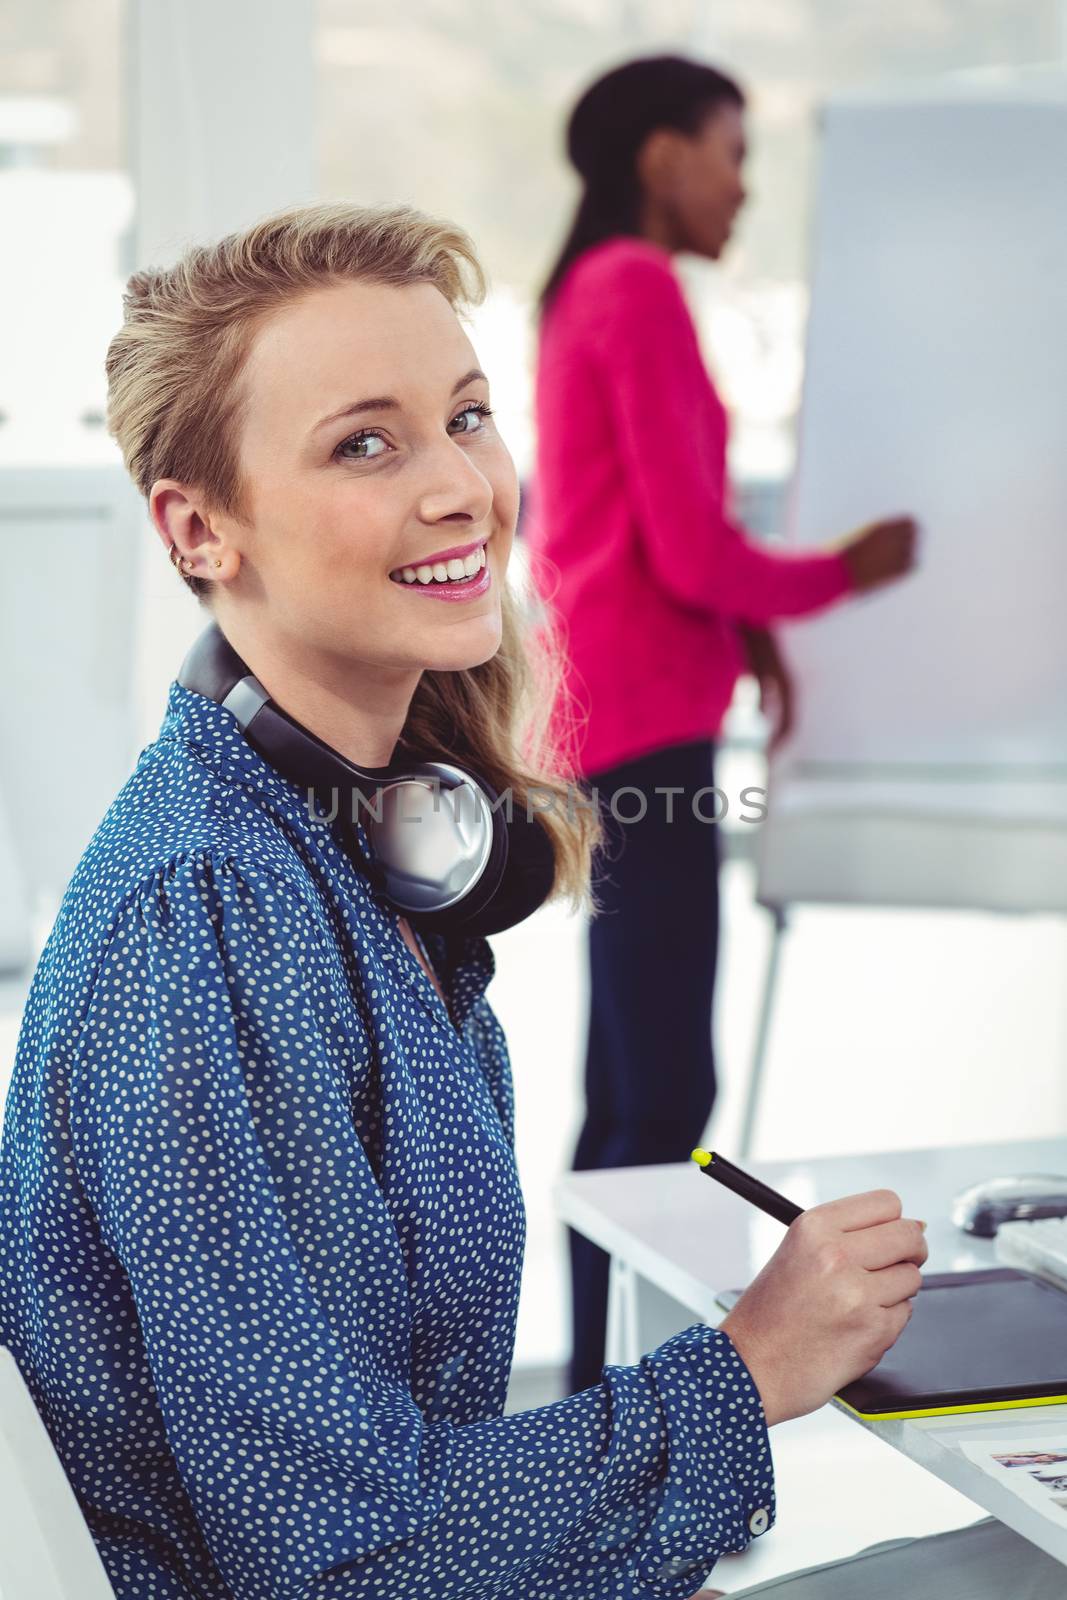 Graphic designer wearing headphones at desk by Wavebreakmedia